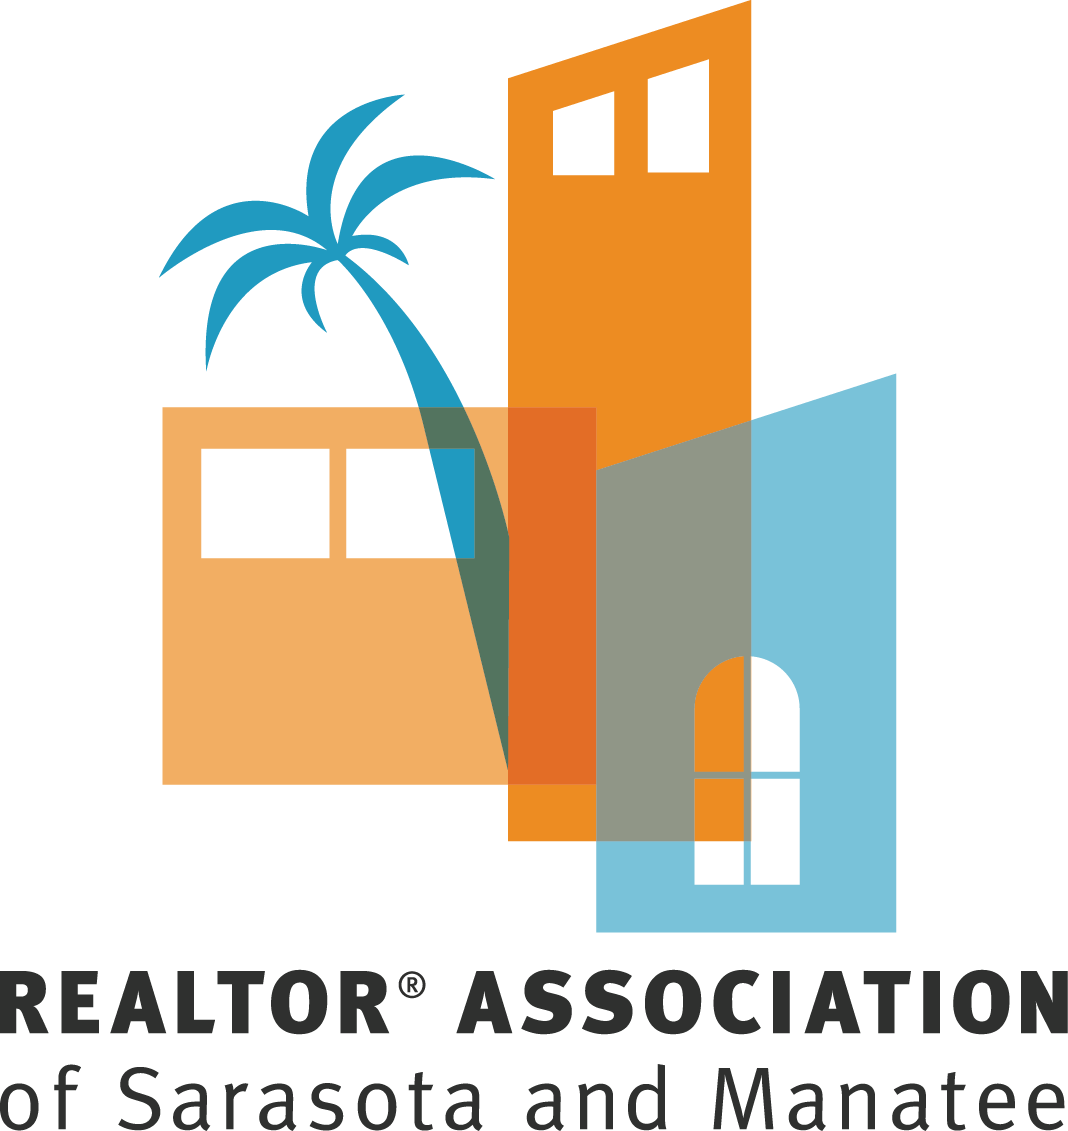 Gri 101 @ Realtor Association Of Sarasota And Manatee - Southern California Association Of Governments (1068x1131)